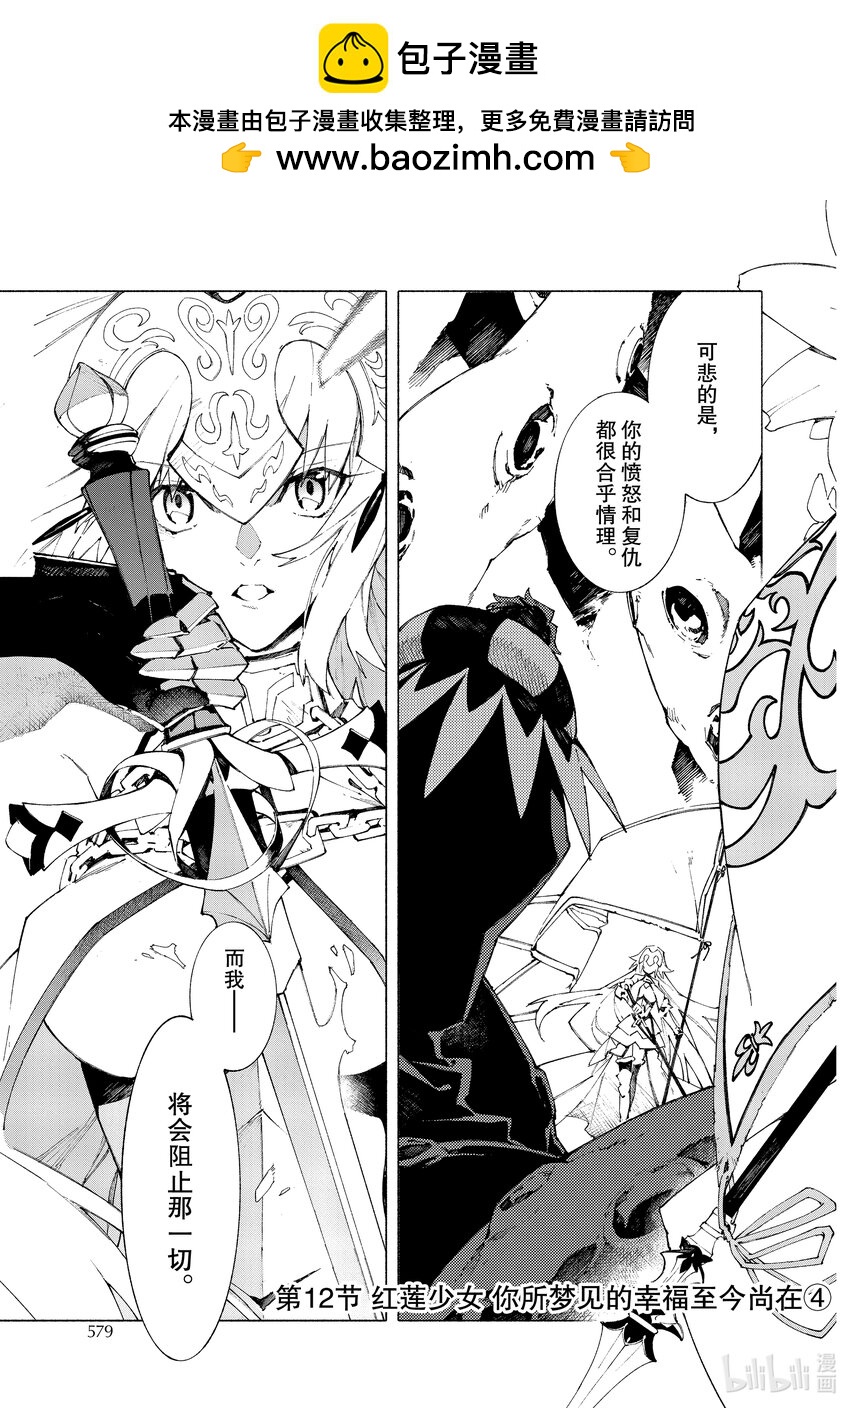 Fate/Grand Order -mortalis:stella- - 12-4 紅蓮少女 你所夢見的幸福至今尚在④ - 1